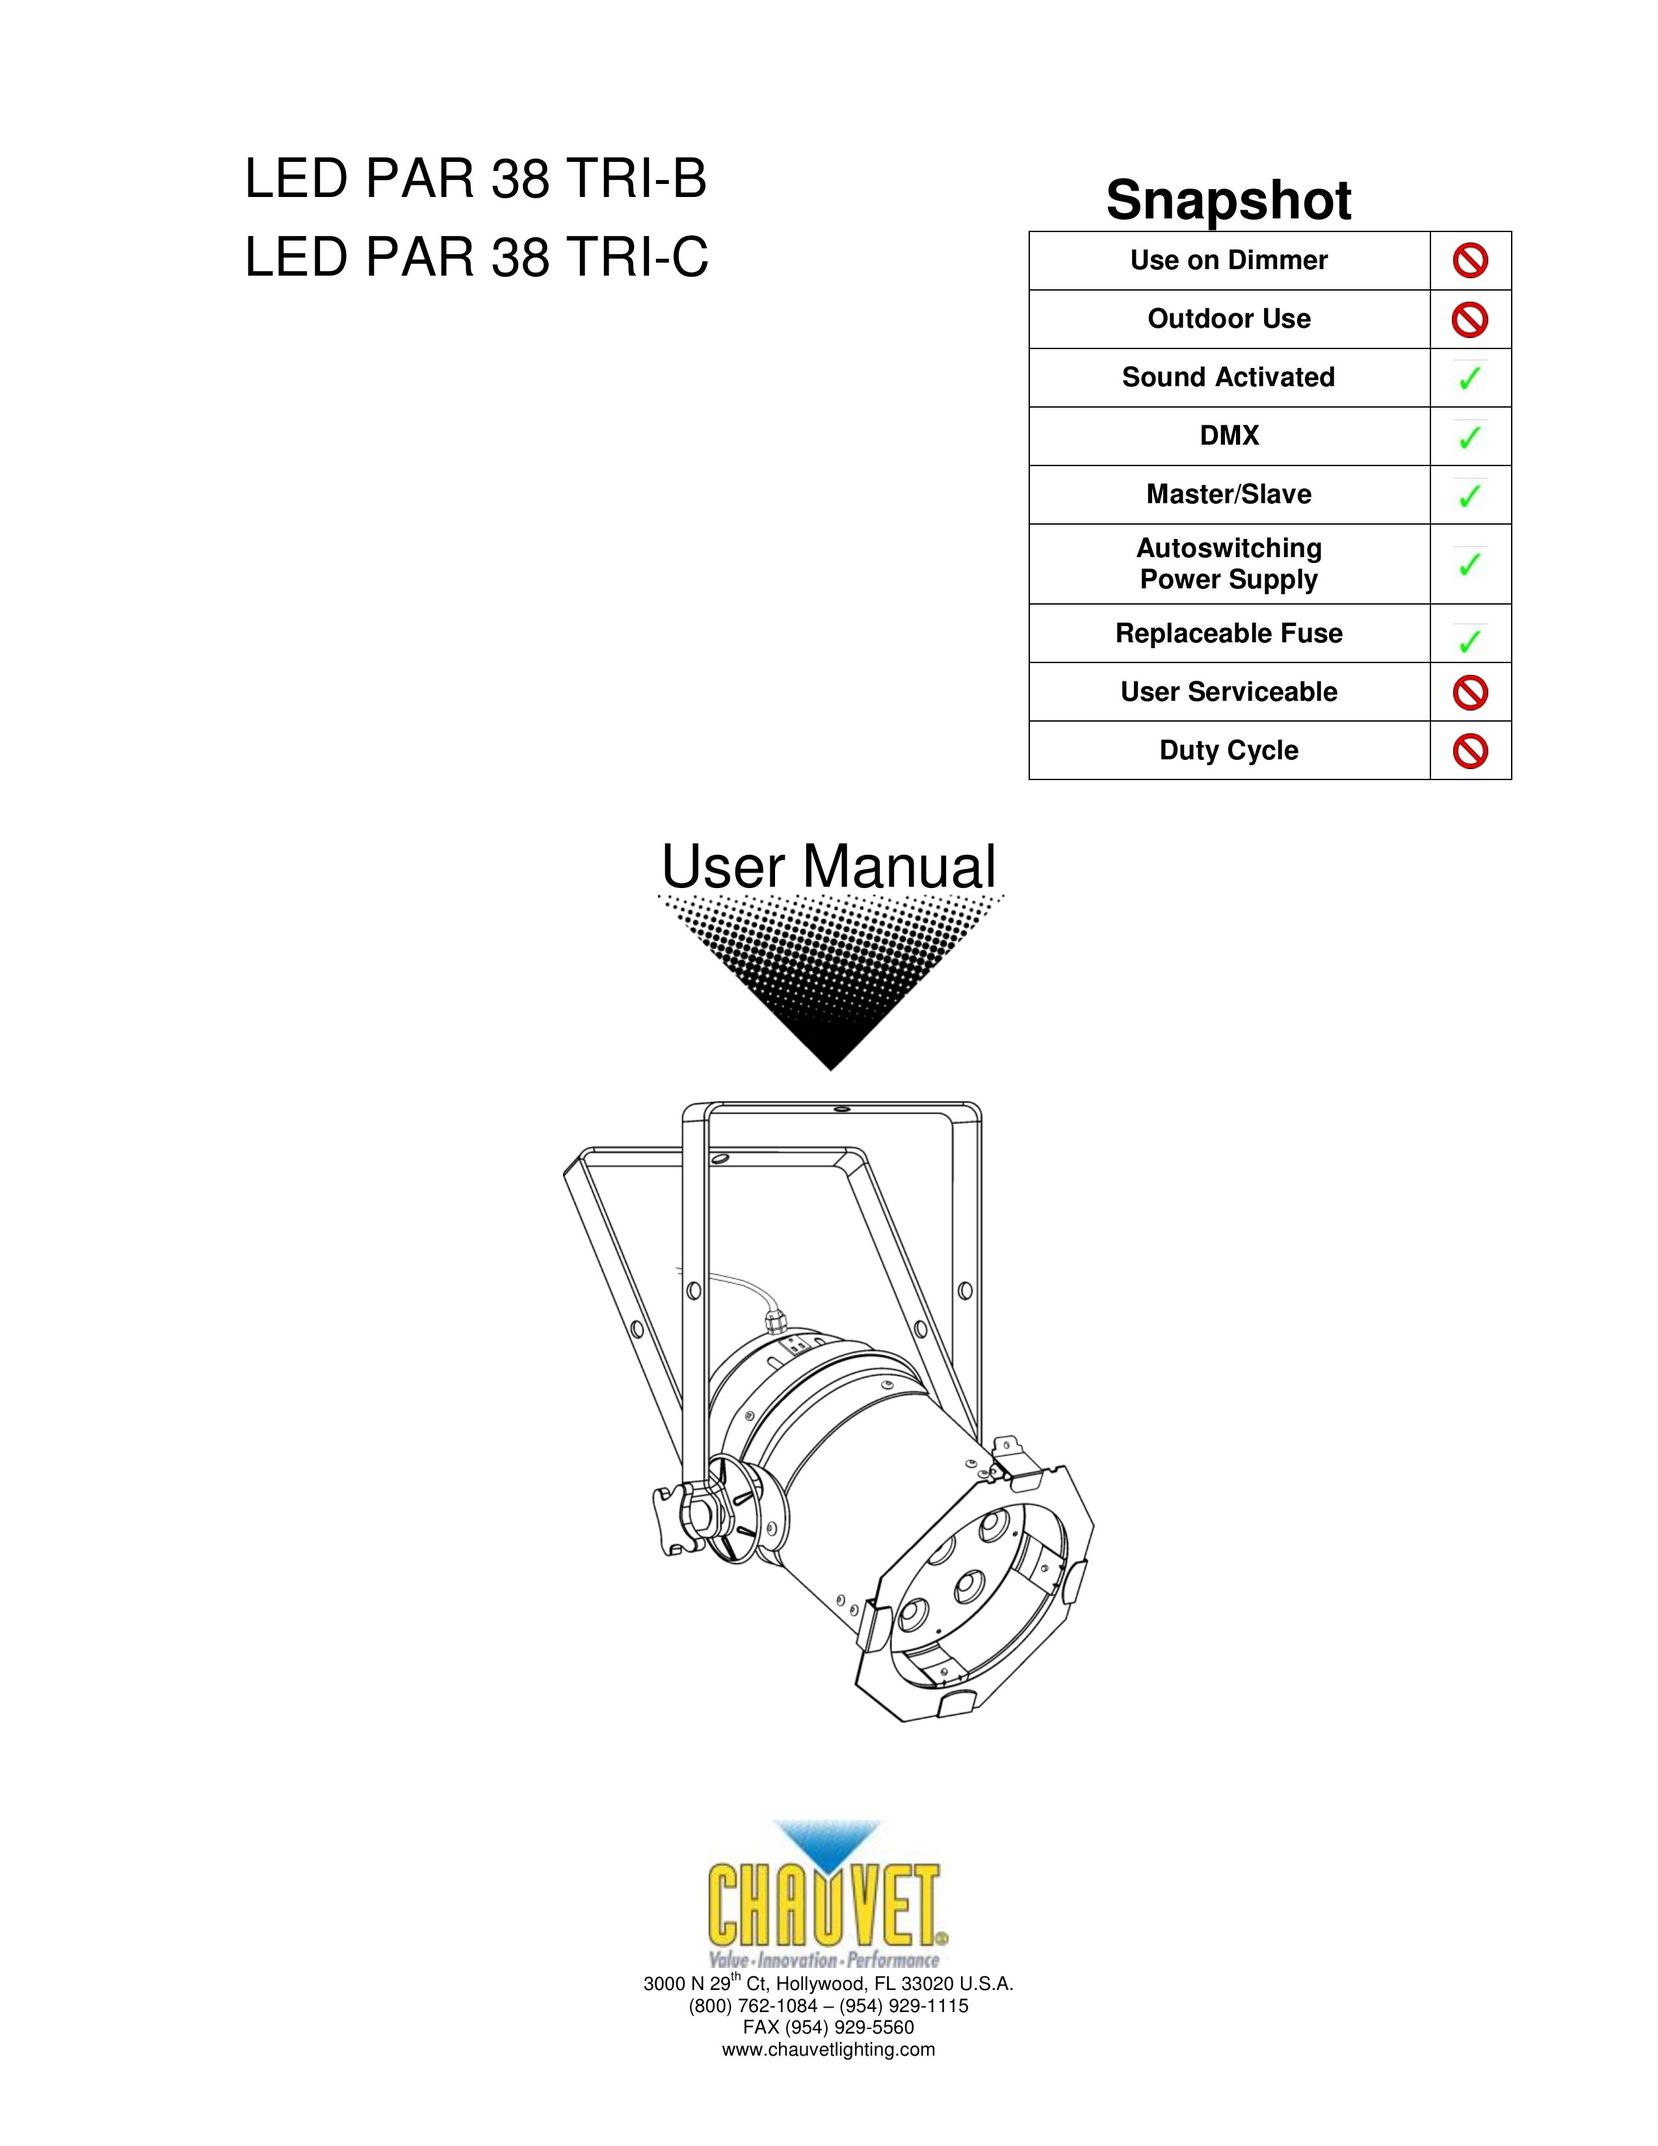 Chauvet LED PAR 38 TRI-C Laminator User Manual